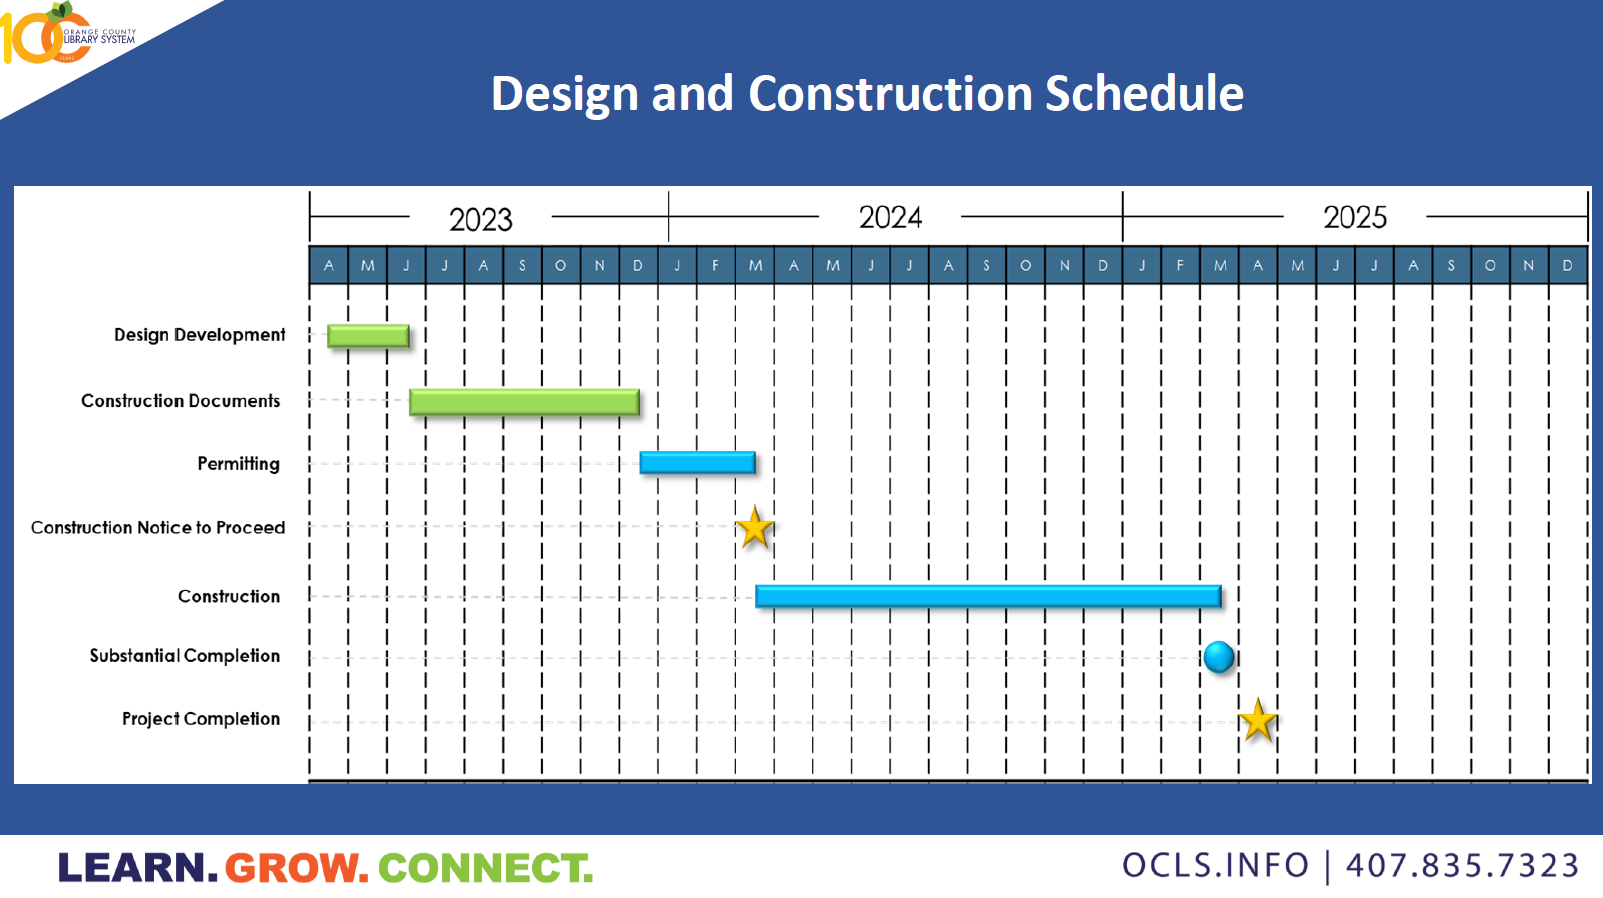 Design Schedule Horizon West Library thumbnail image.